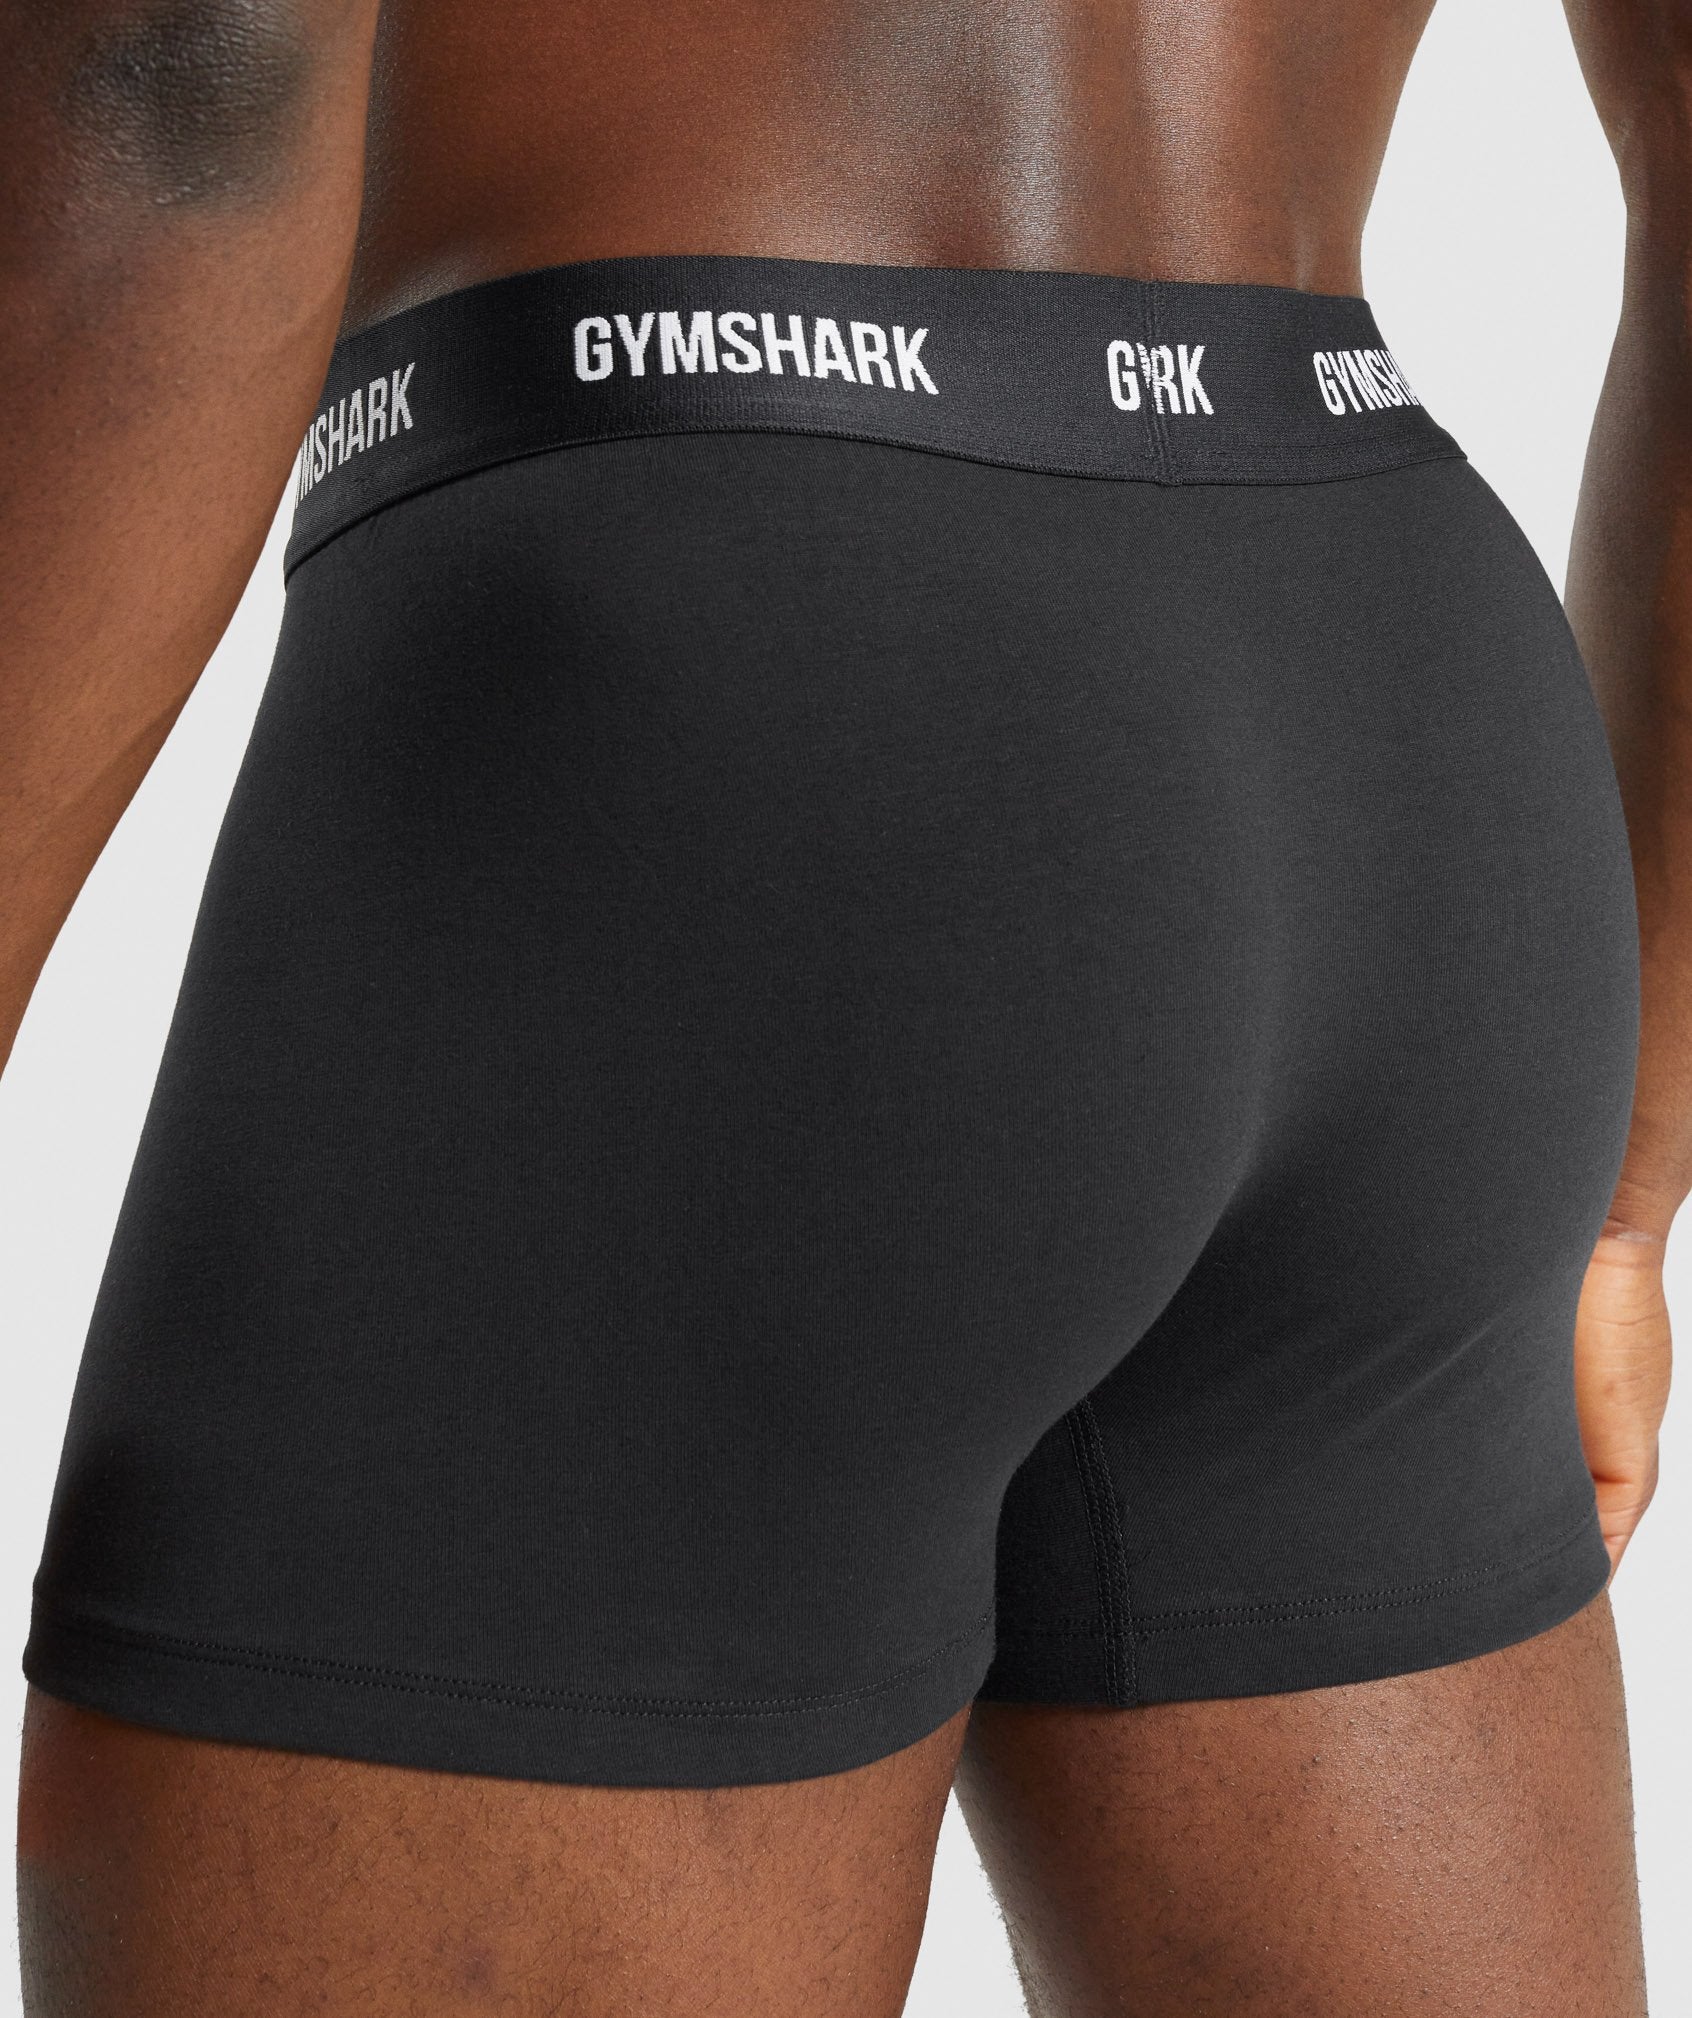 Comfortable Gymshark Boxers for Men